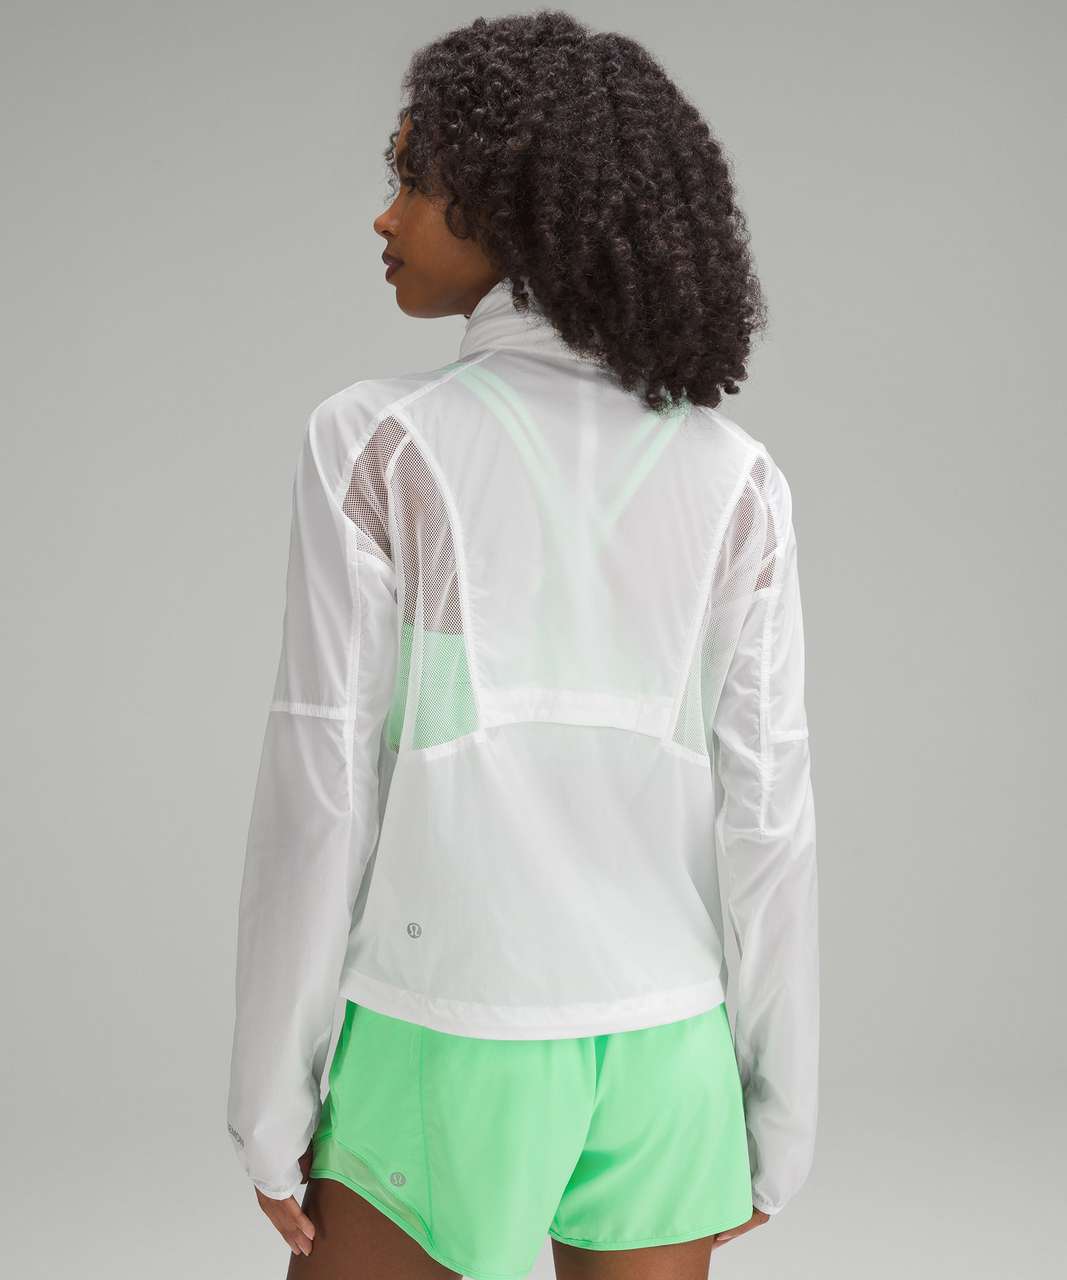 Lululemon Classic-Fit Ventilated Running Jacket - White